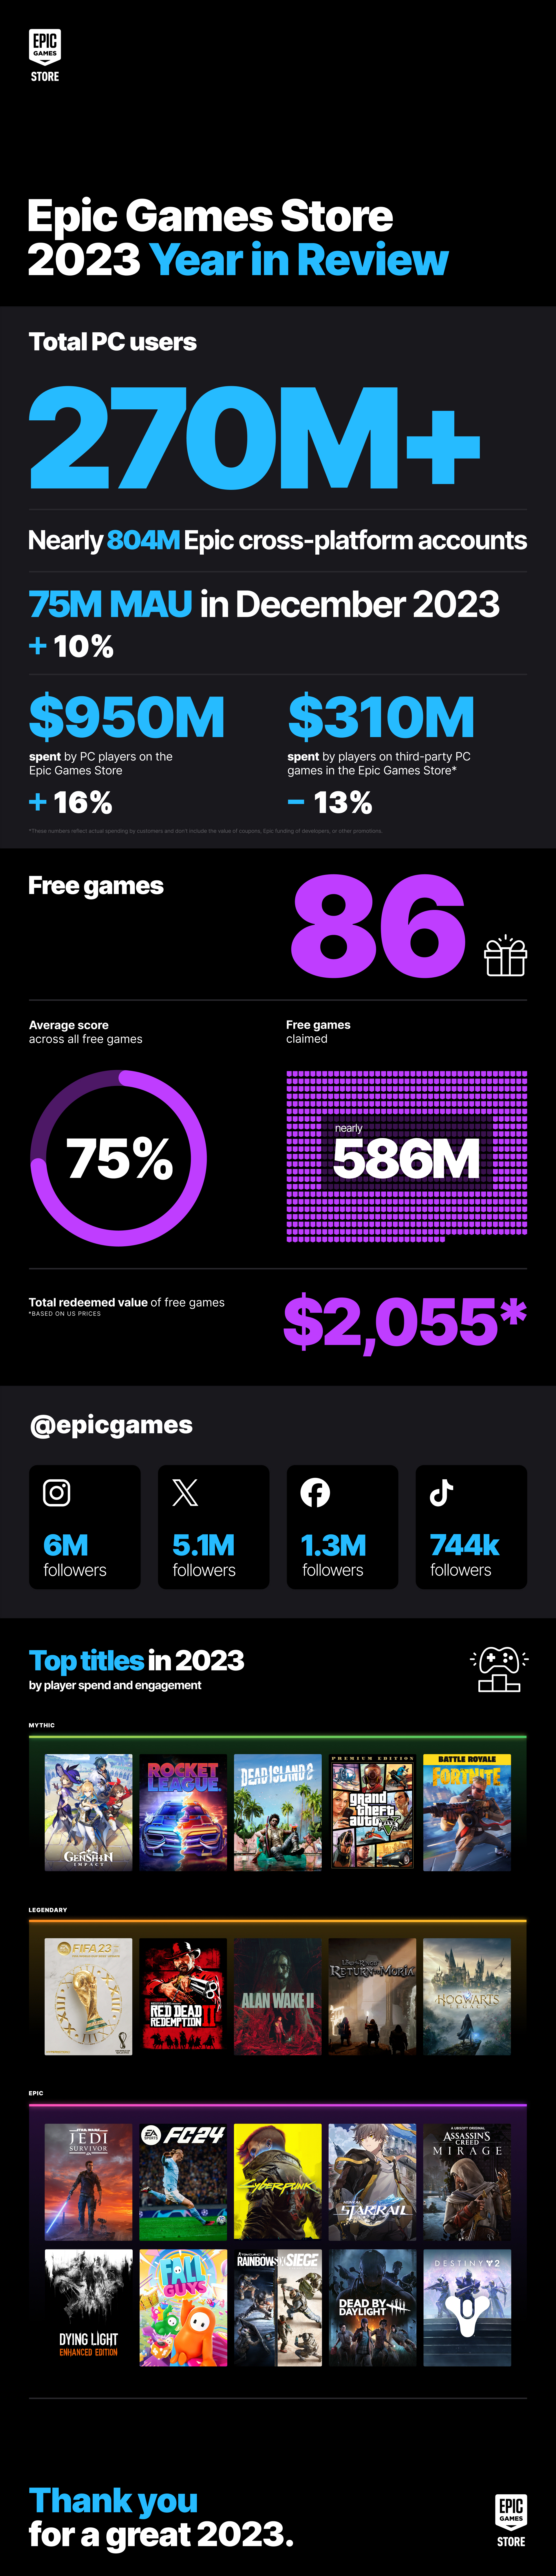 Infografik zum Epic Games Store-Jahresrückblick 2023